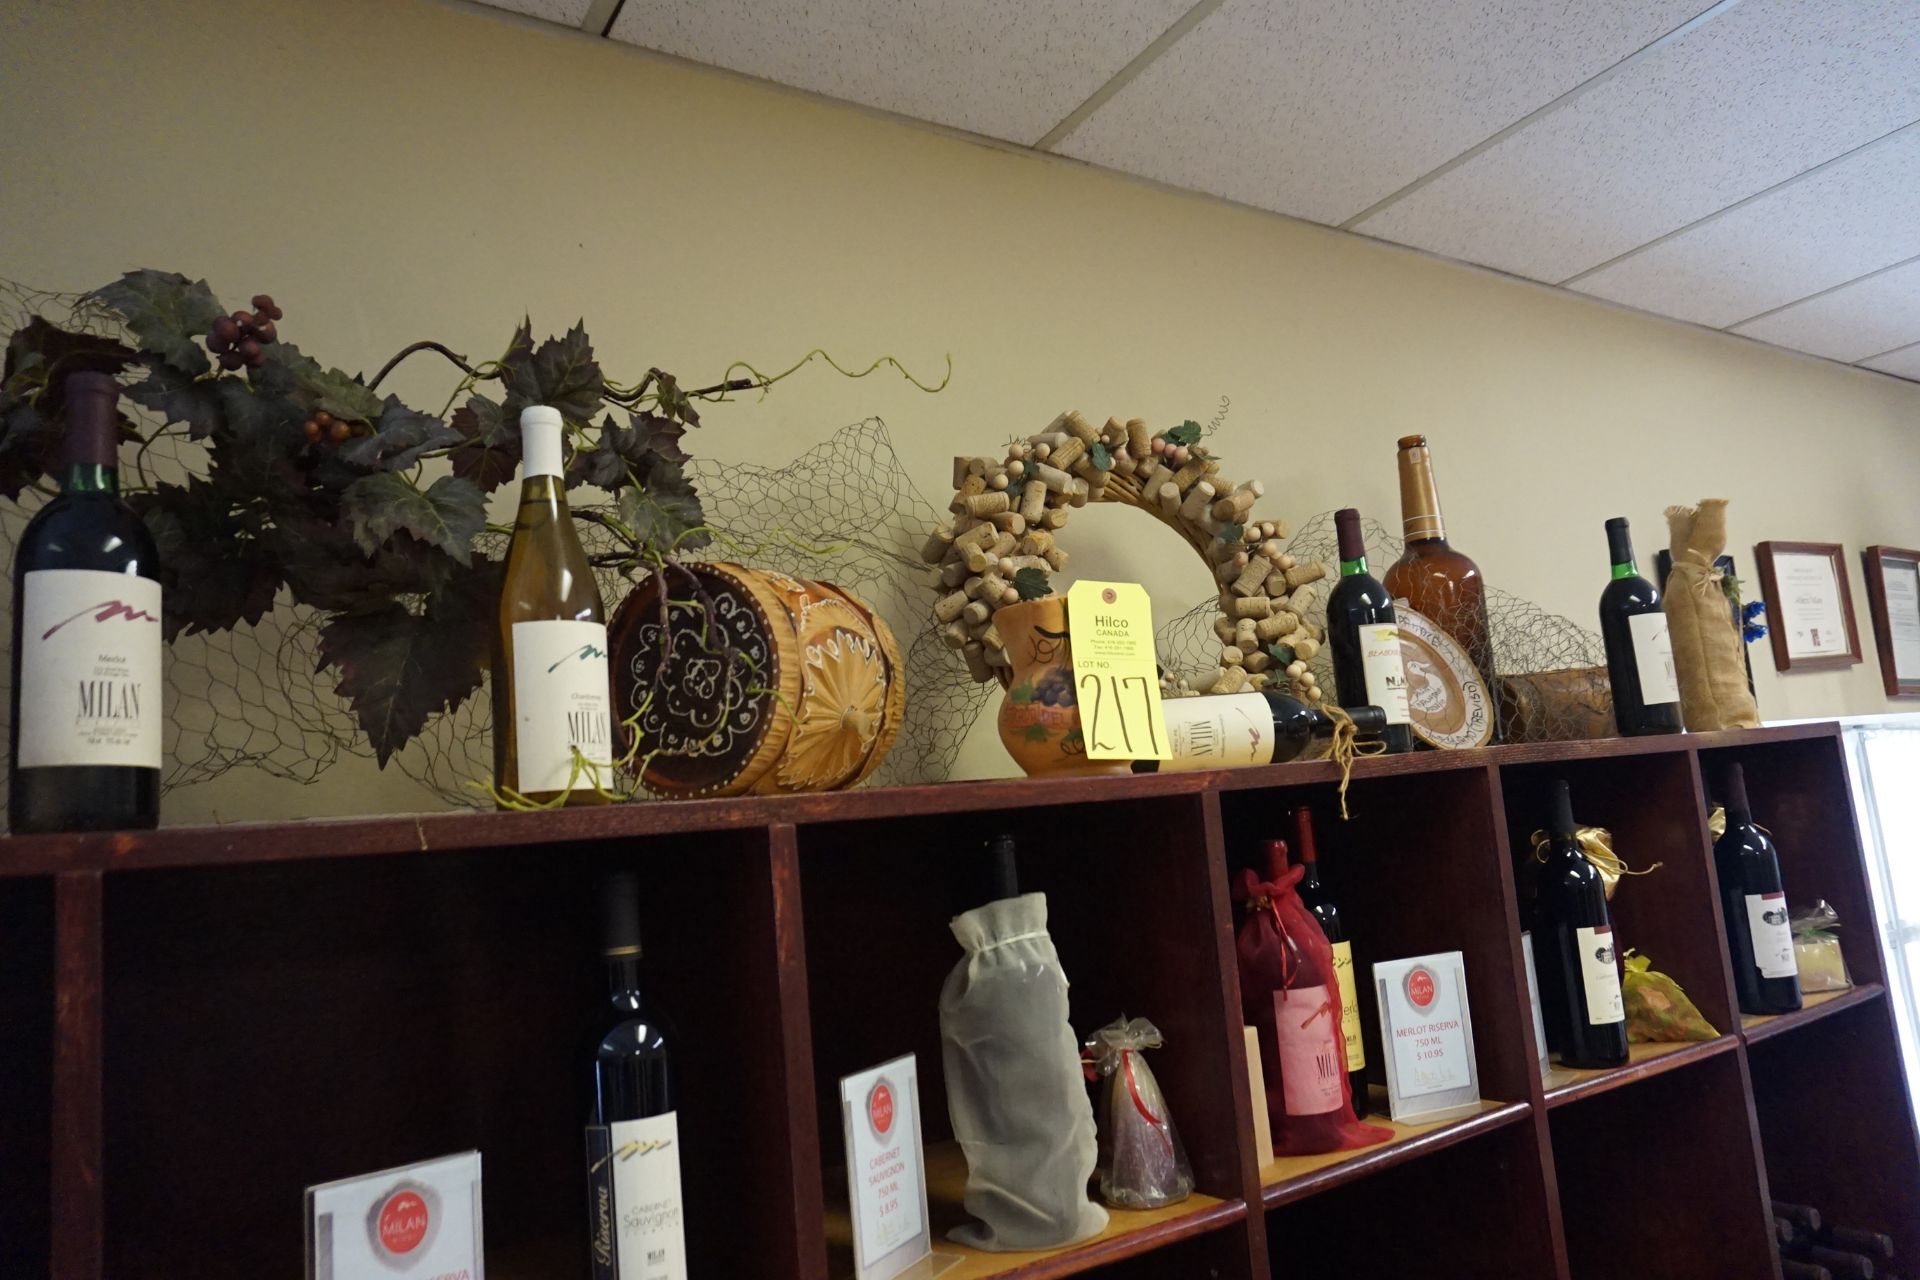 Asst. Decor, Wine Racks (Located on Shelving Displays) - Image 6 of 17